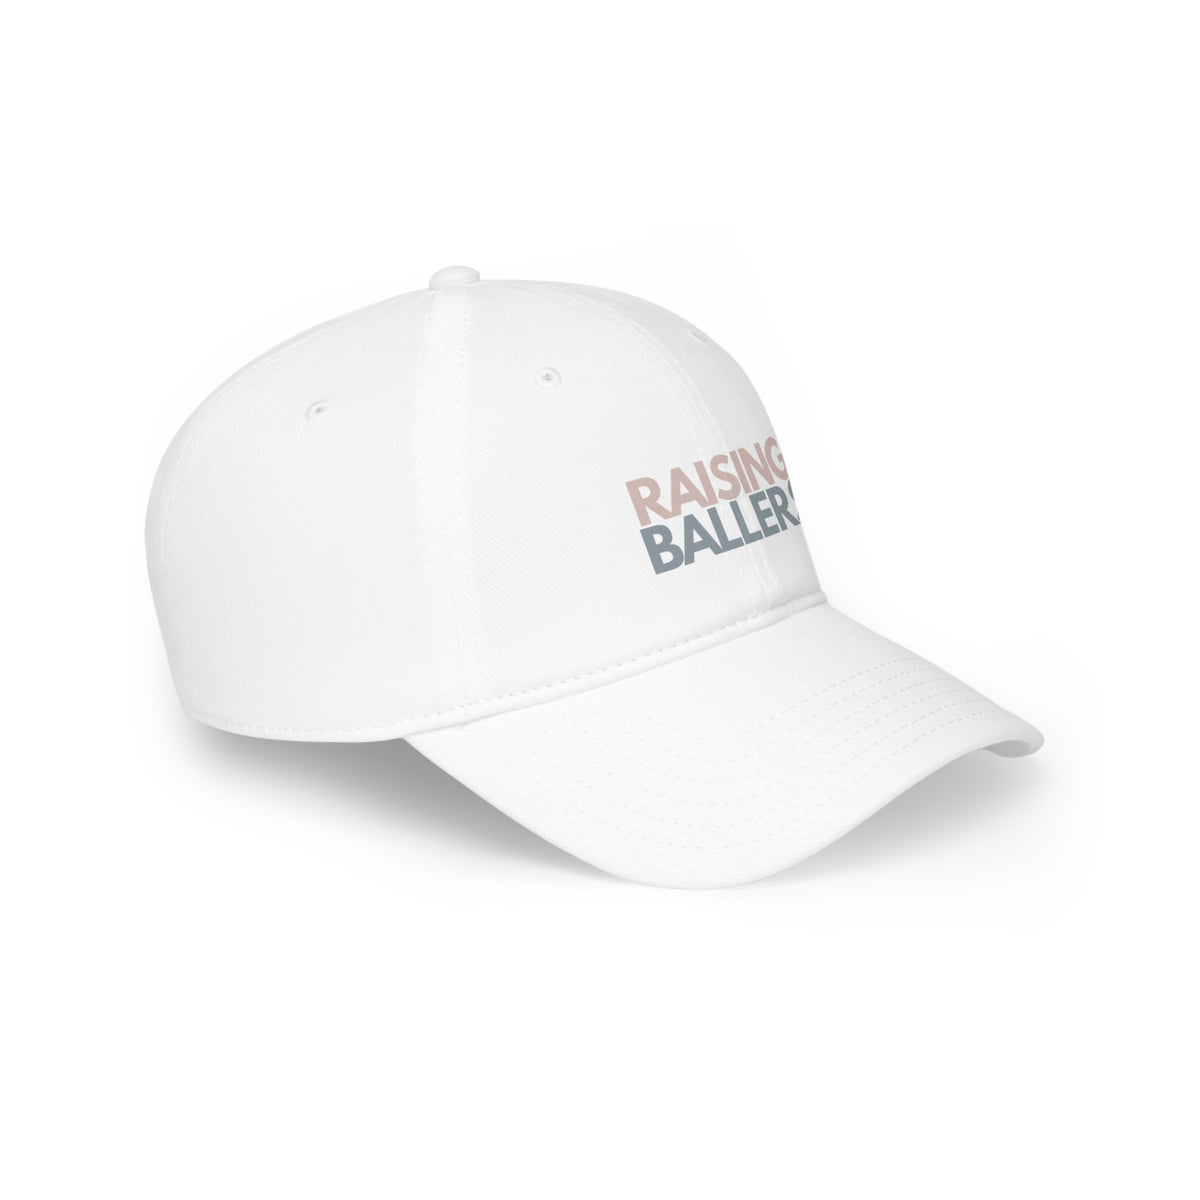 Raising Ballers Baseball Hat